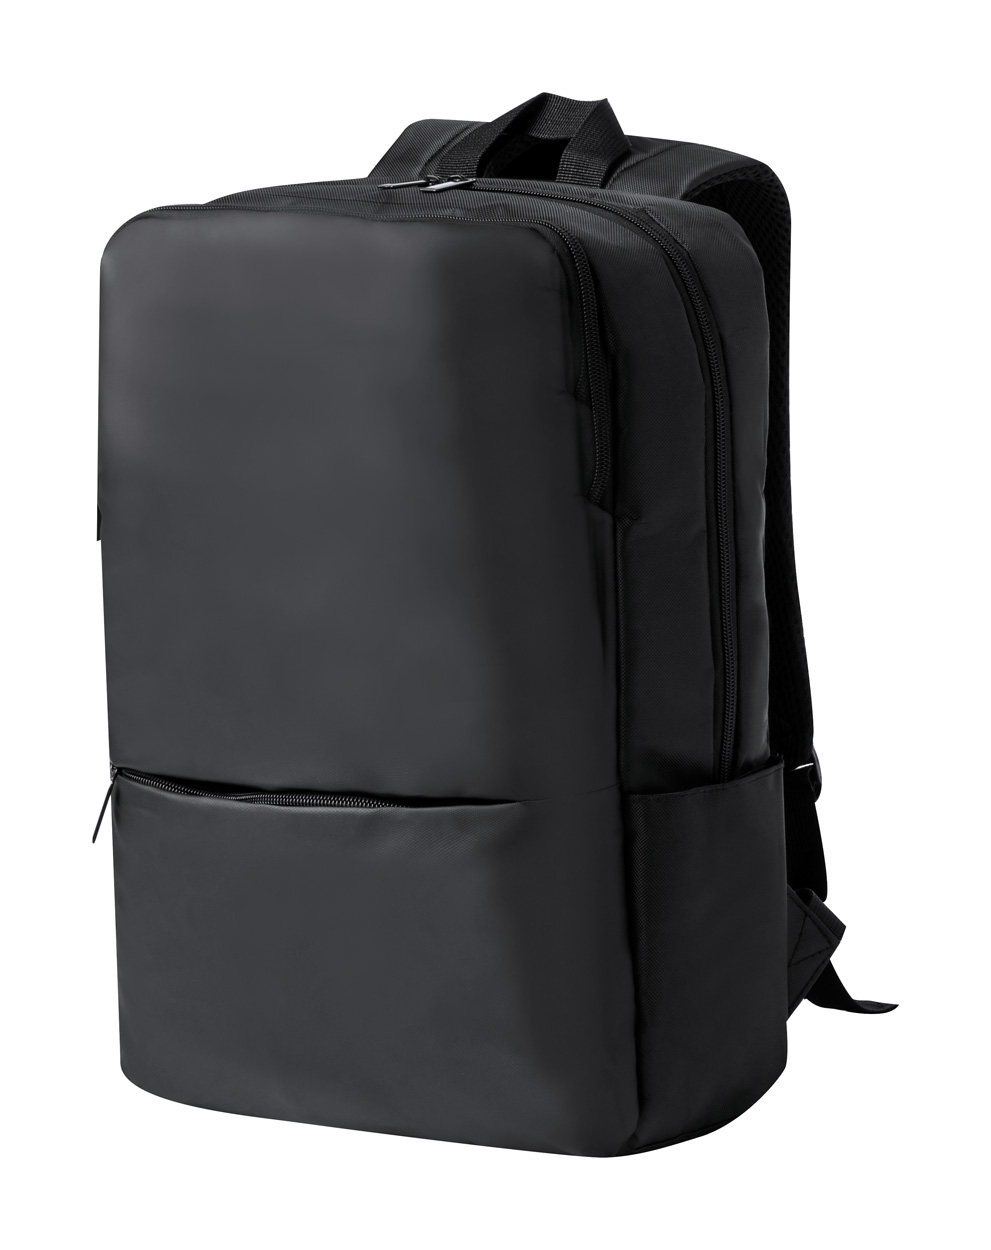 Sarek backpack - black